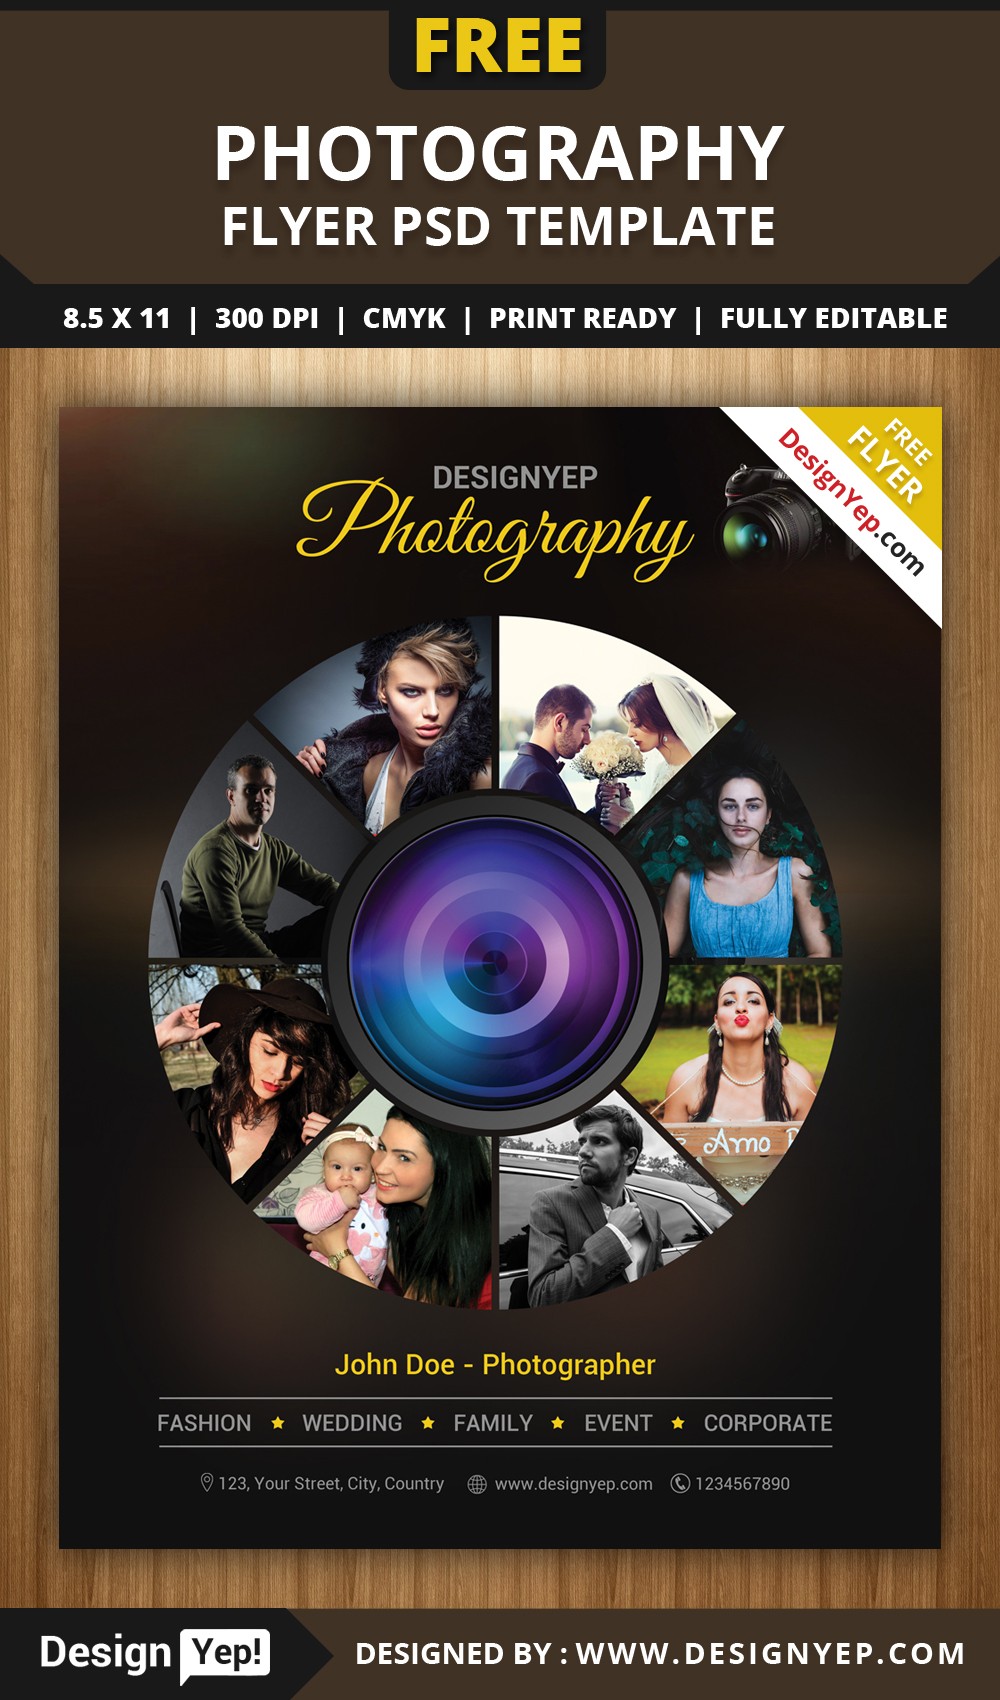 Free Photography Flyer PSD Template DesignYep Psd Templates For Photographers